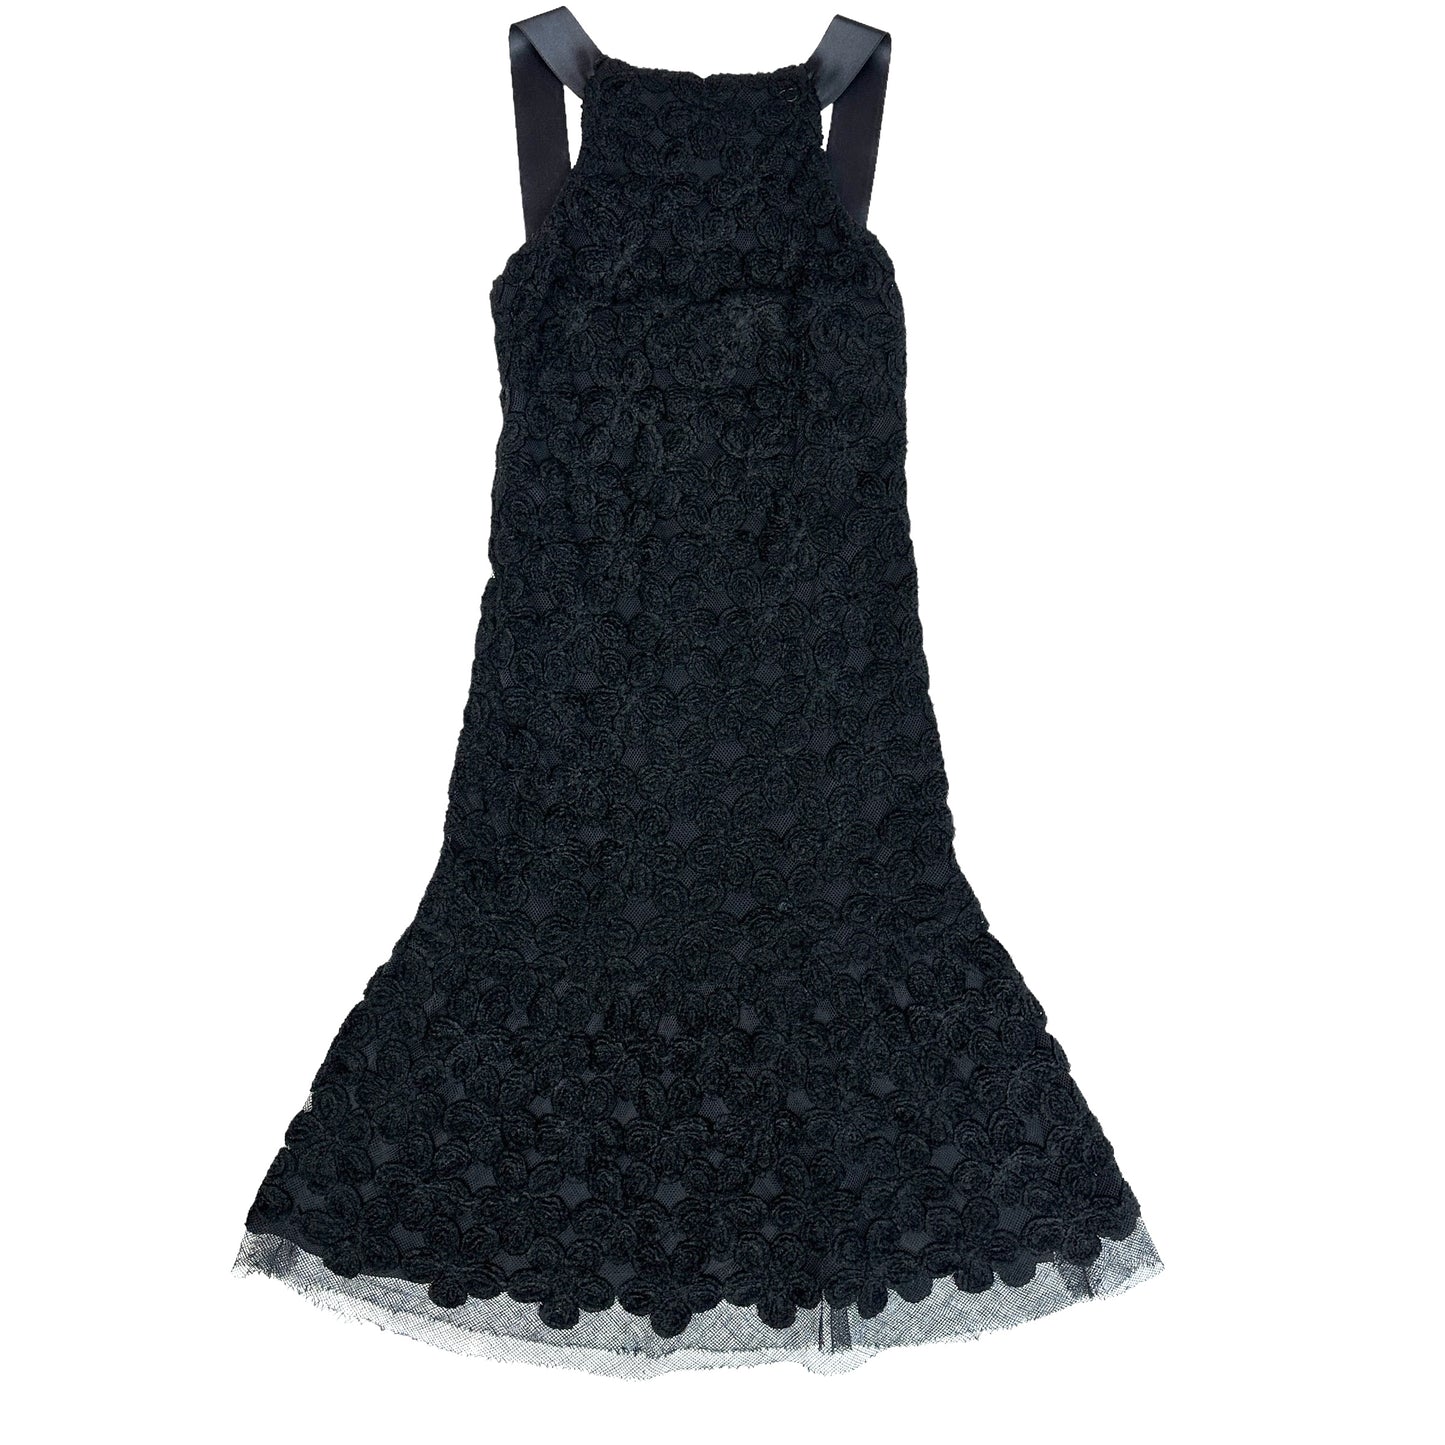 Black Flower Pattern Knit Dress - XS